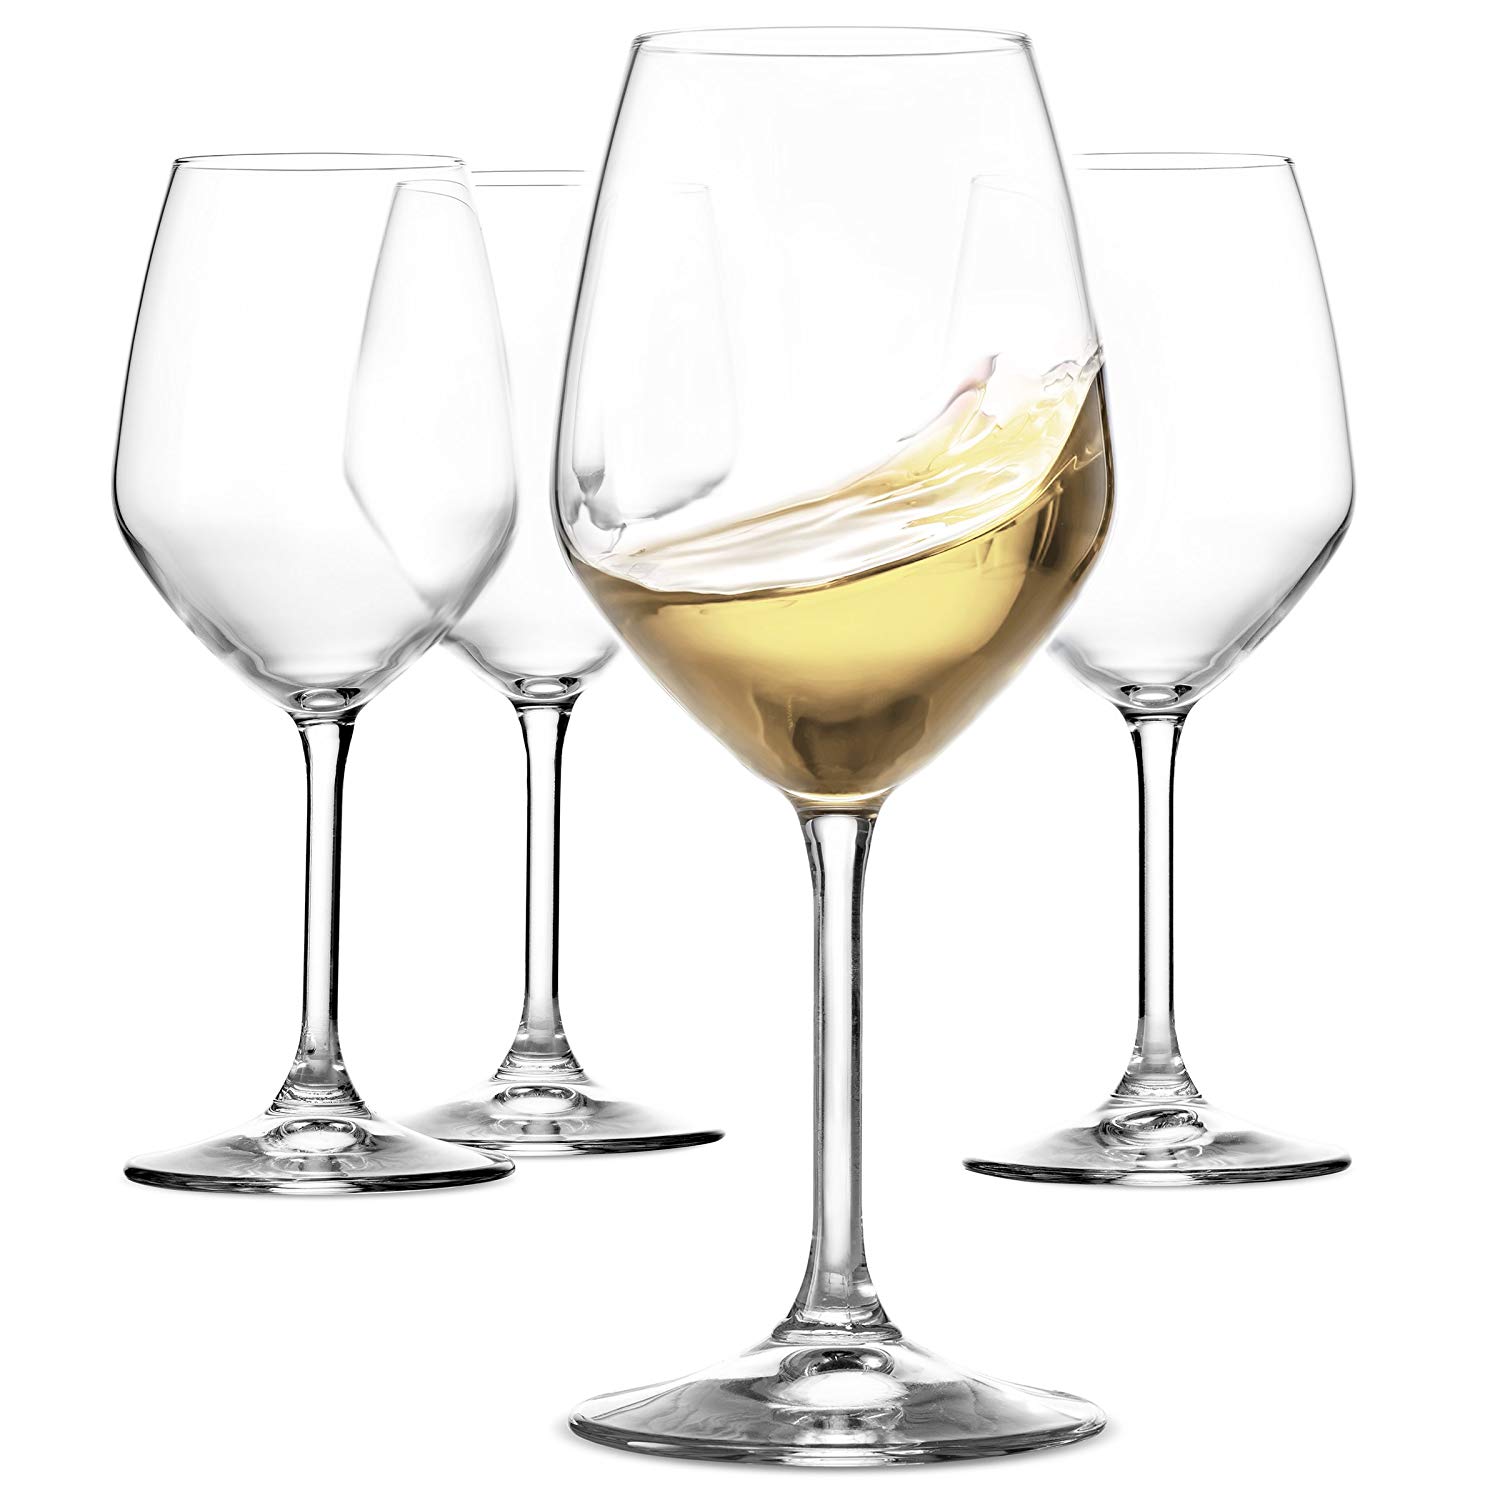 Clear/White Stylish Modern Glasses-Gift for Wedding Elegant Lead-Free Matching Drinkware for Everyday Or Entertaining Elle Decor Simone Stemless Wine Set of 4 16 oz Birthday 